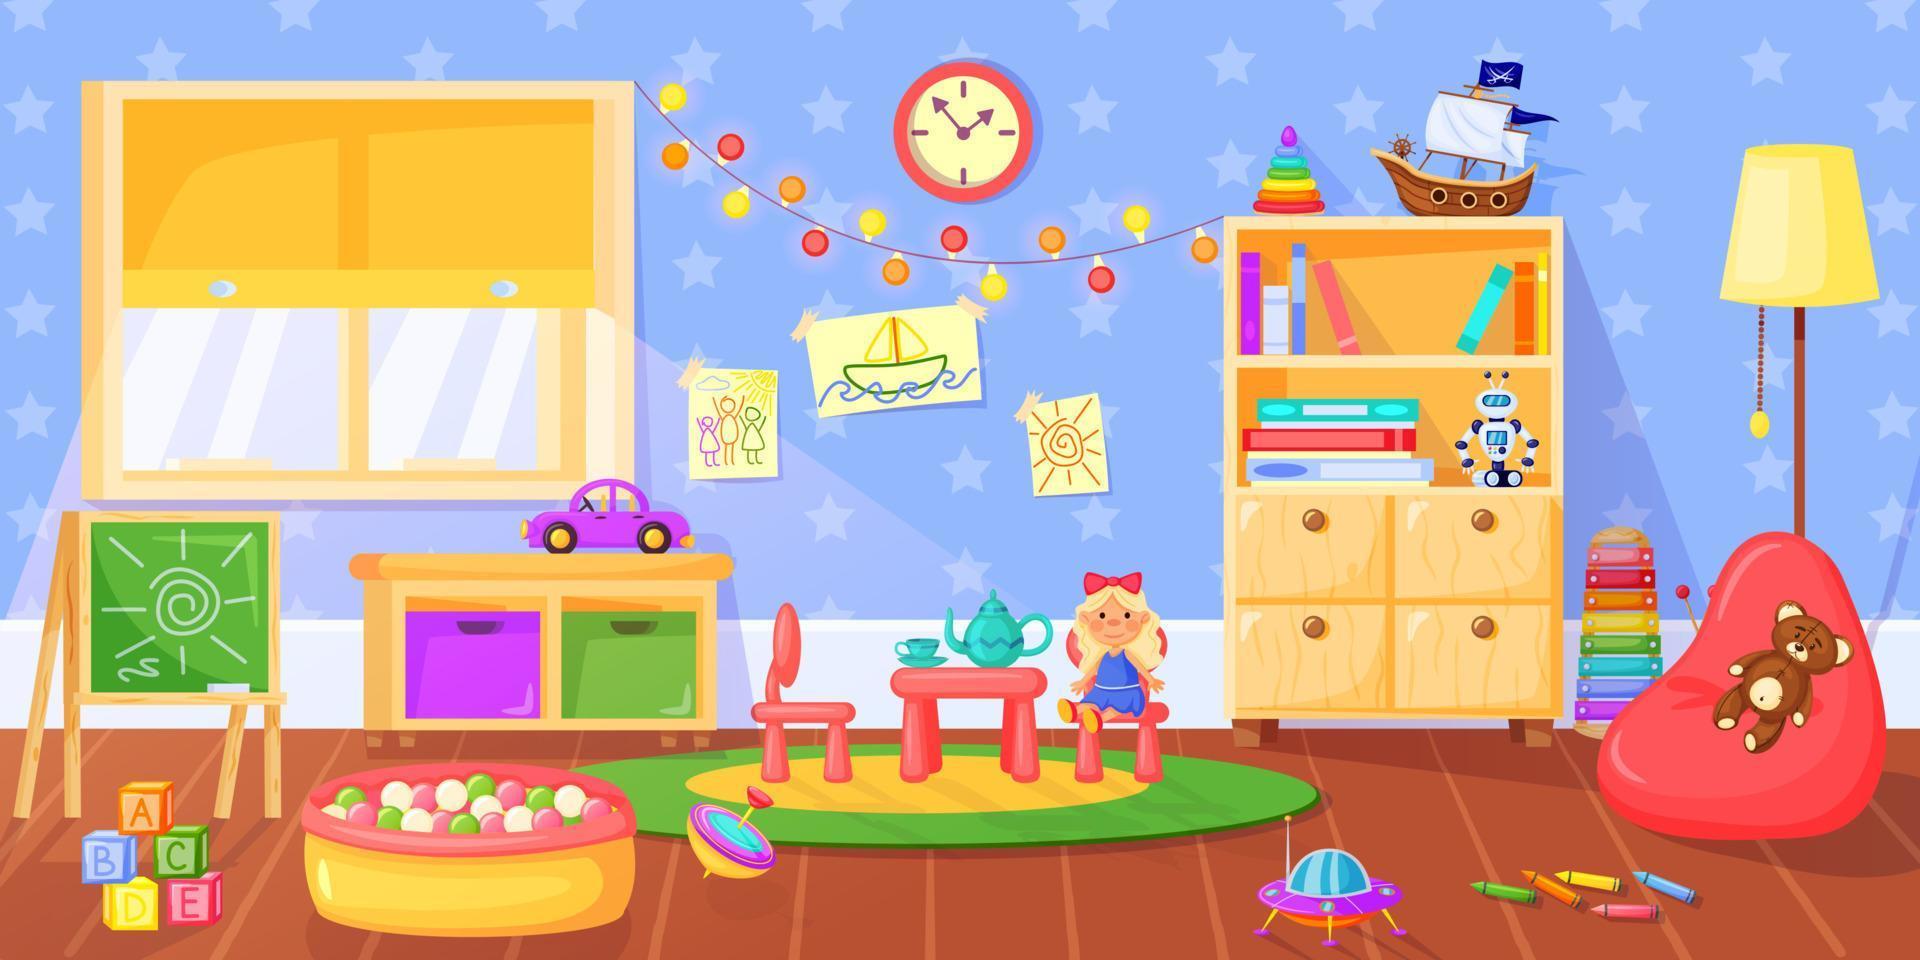 Kindergarten room. Preschool children playroom interior with toys, bookshelves, blackboard and furniture. Cartoon classroom vector illustration